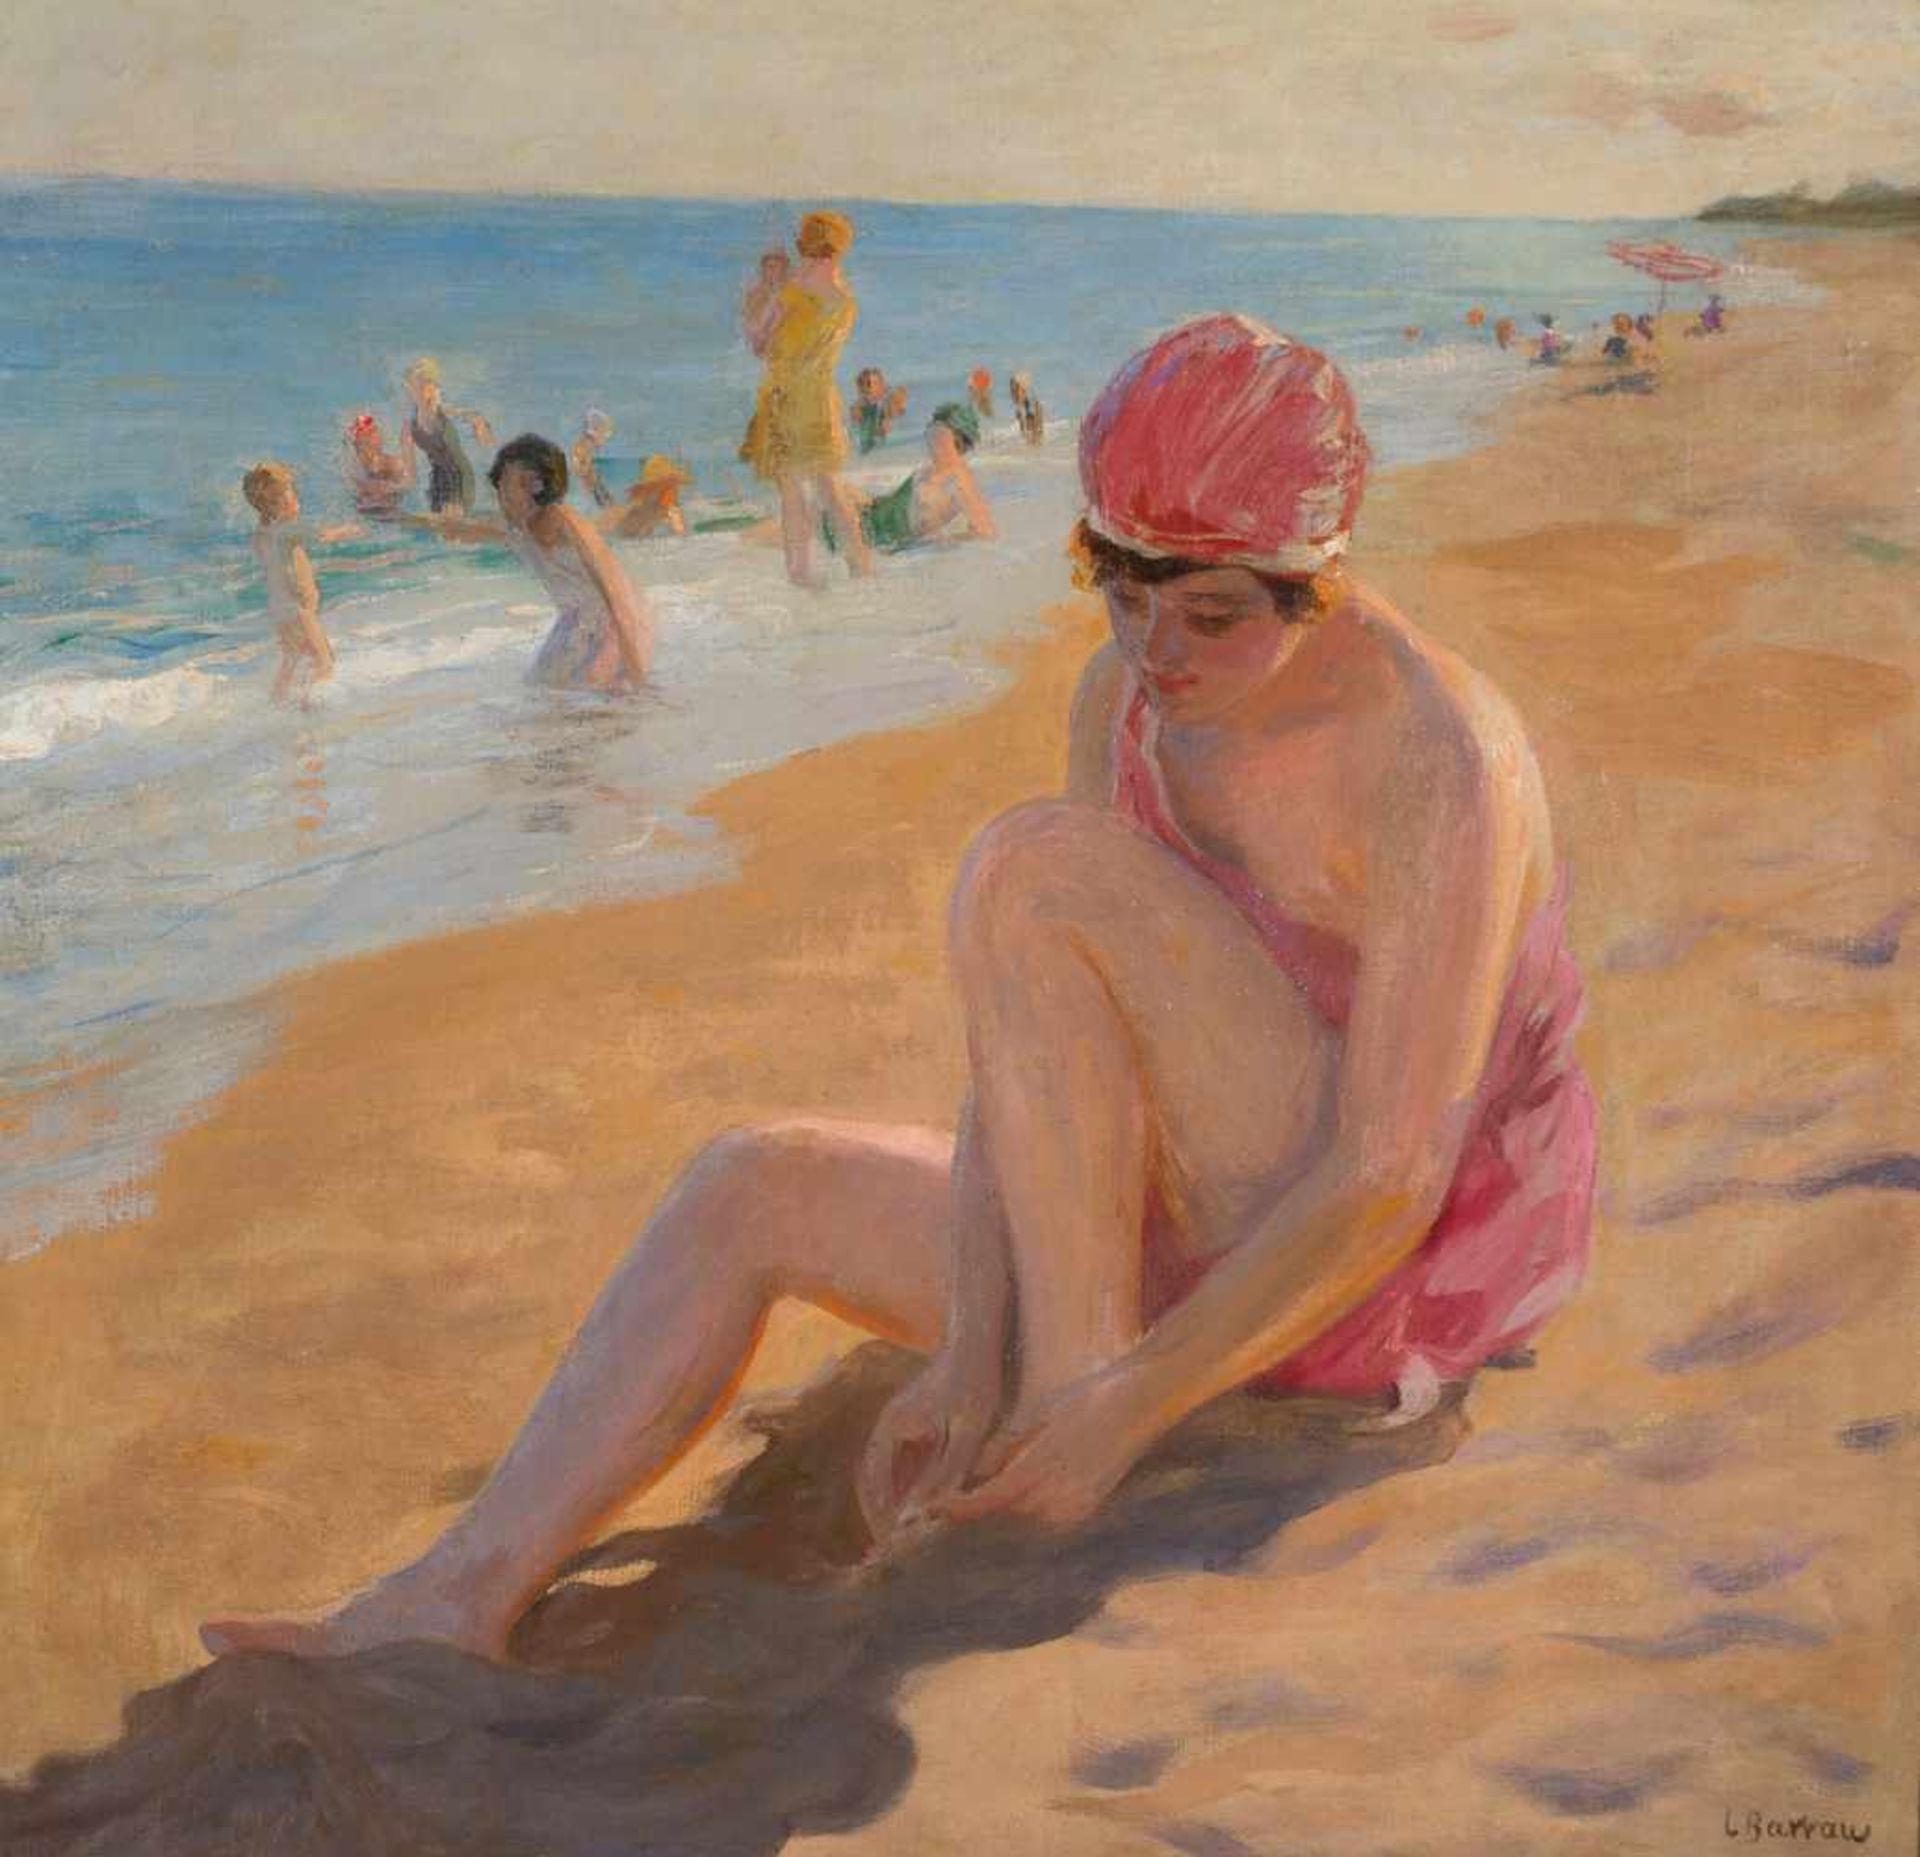 Laureano Barrau (Barcelona, 1863 − Ibiza, 1957)"Bather"Oil on canvas. Signed. 76 x 78 cm.- - -22.